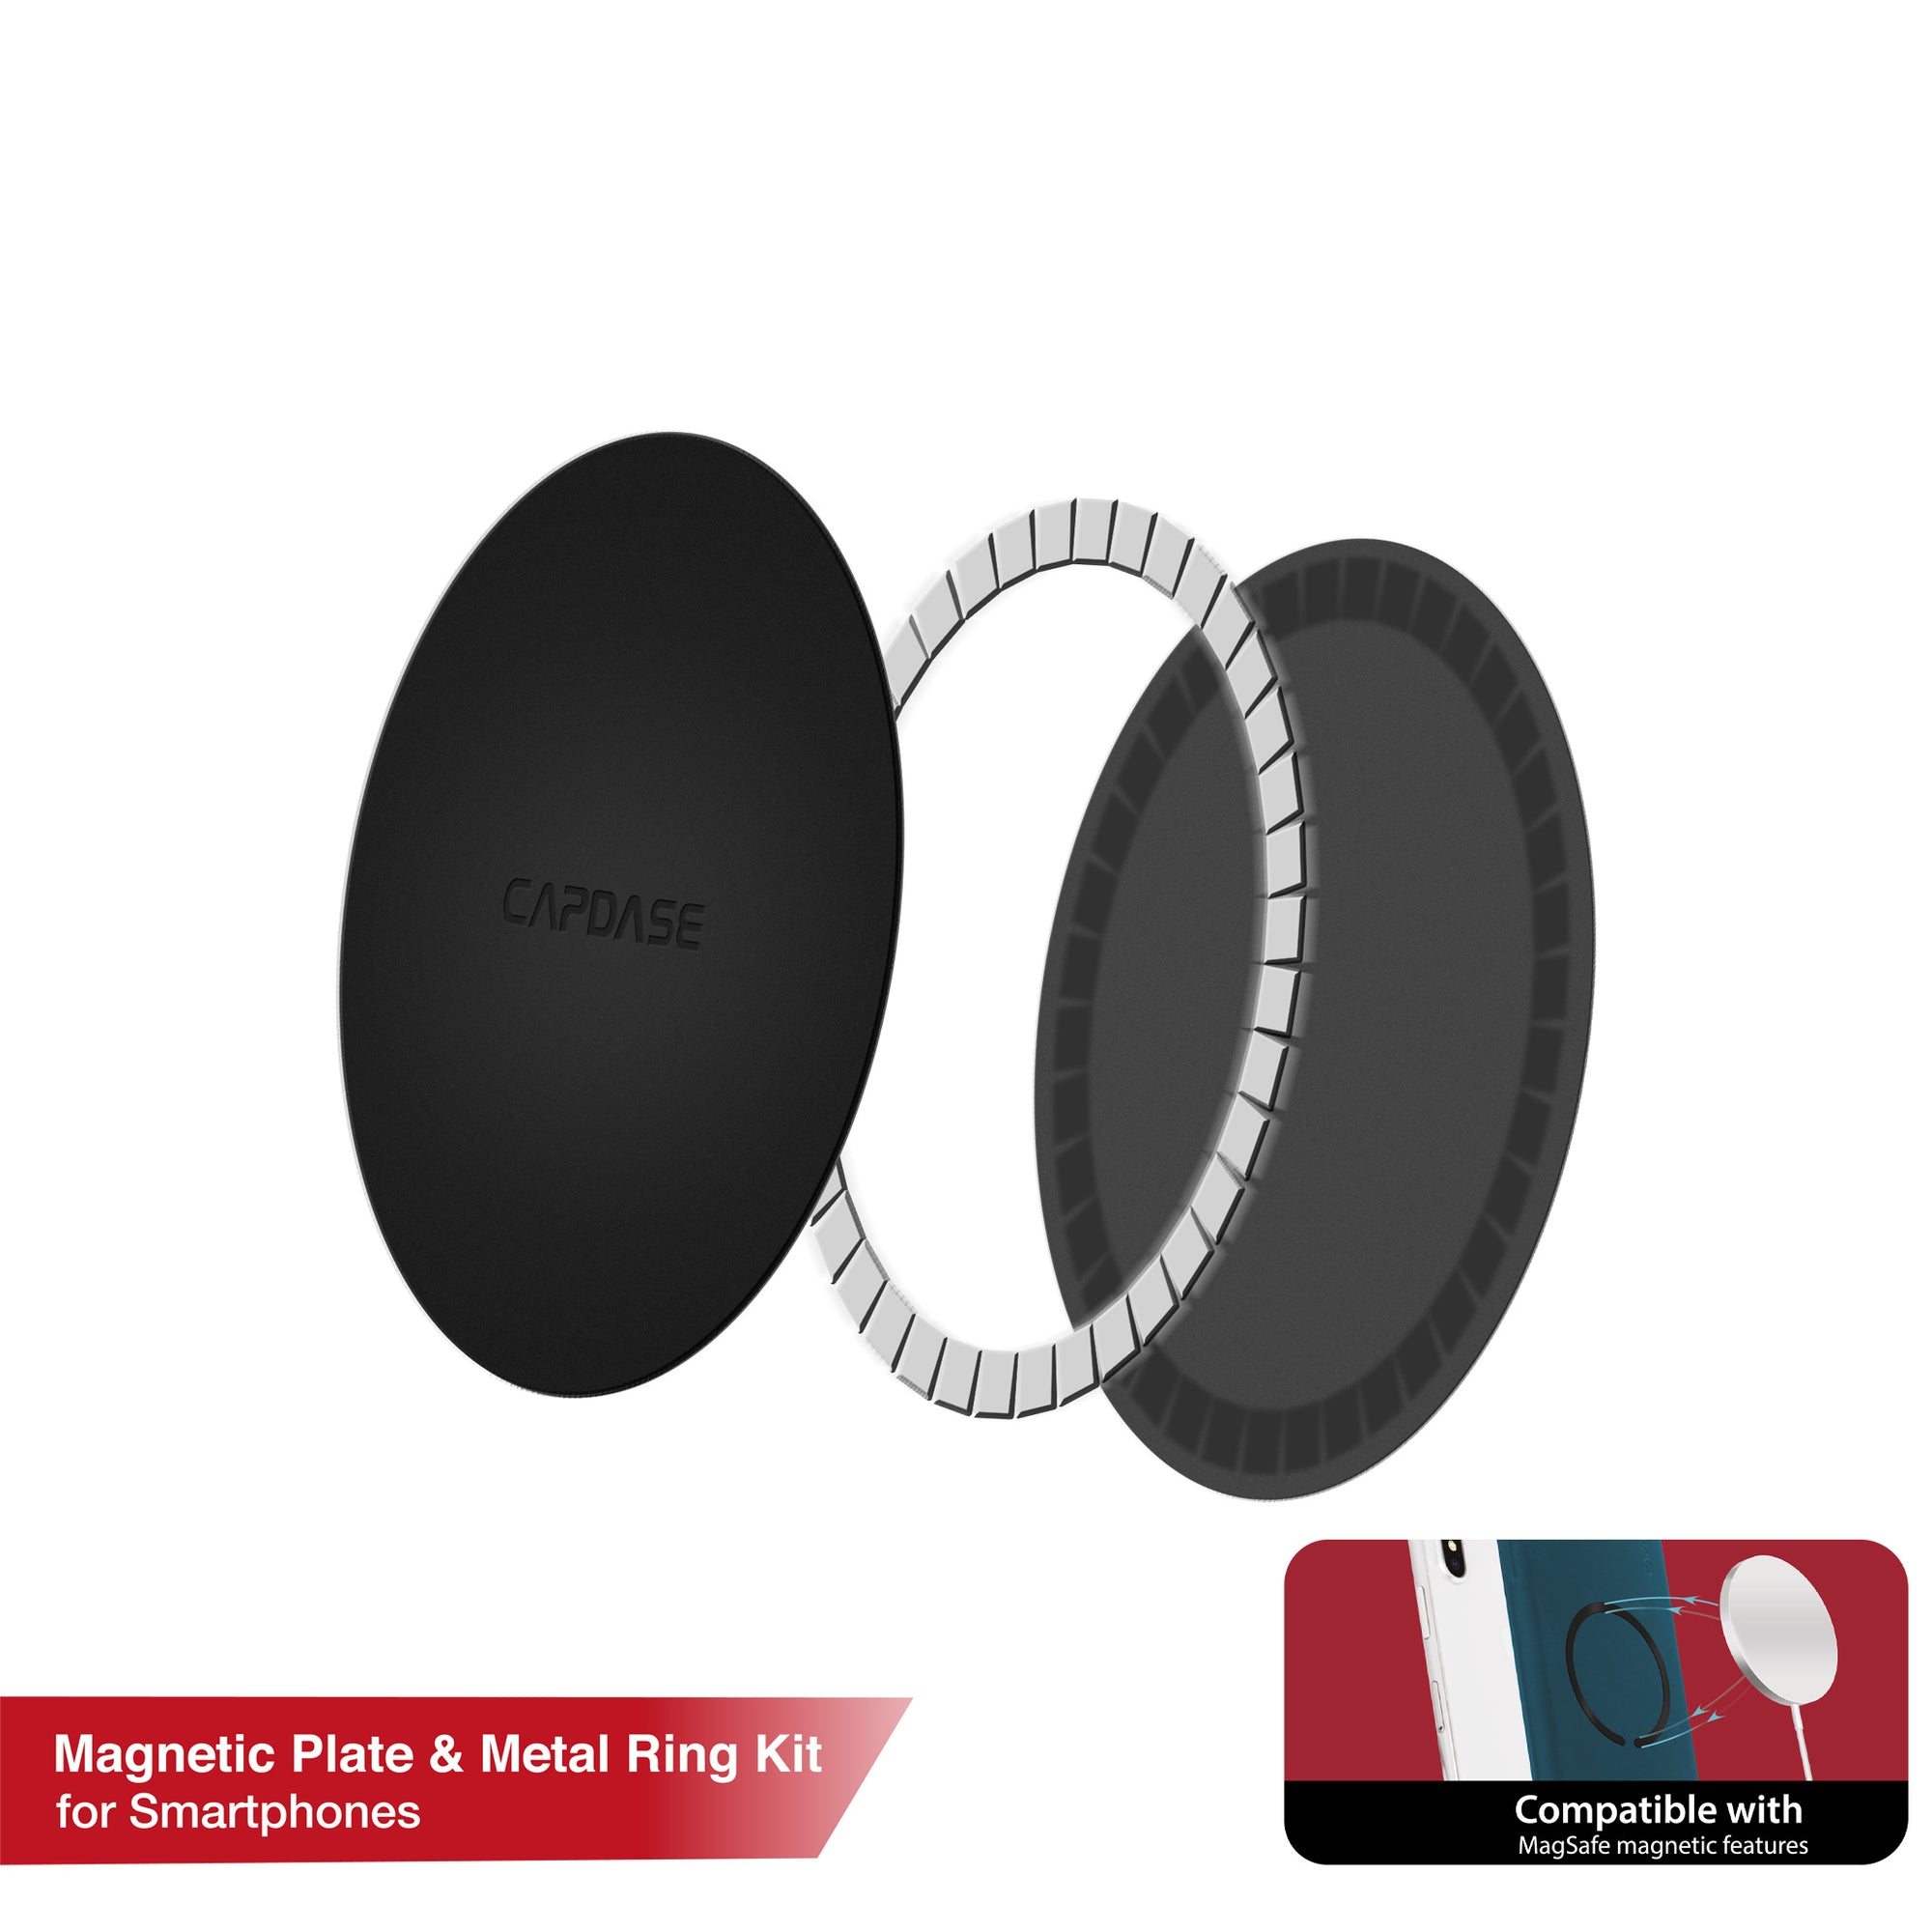 Magnetic Plate & Metal Ring Kit